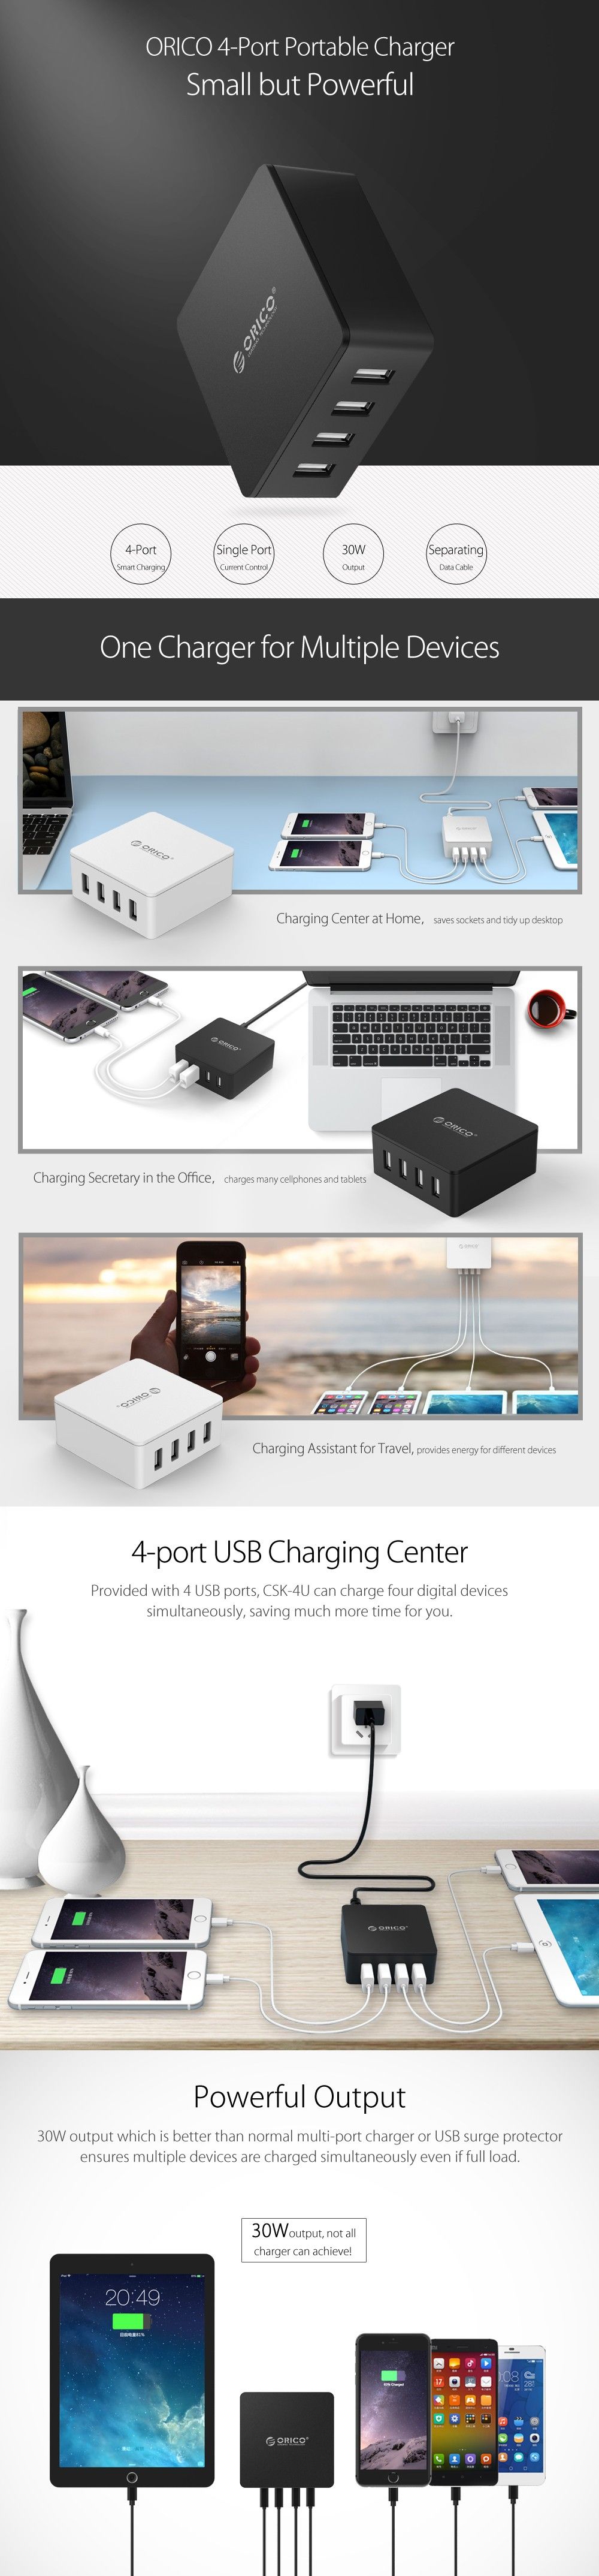 ORICO-USB-Charger-4-Port-EU-Plug-Universal-Smart-Phone-USB-Charger-5V-60A-30W-Output-for-iPhone-11-P-1578466